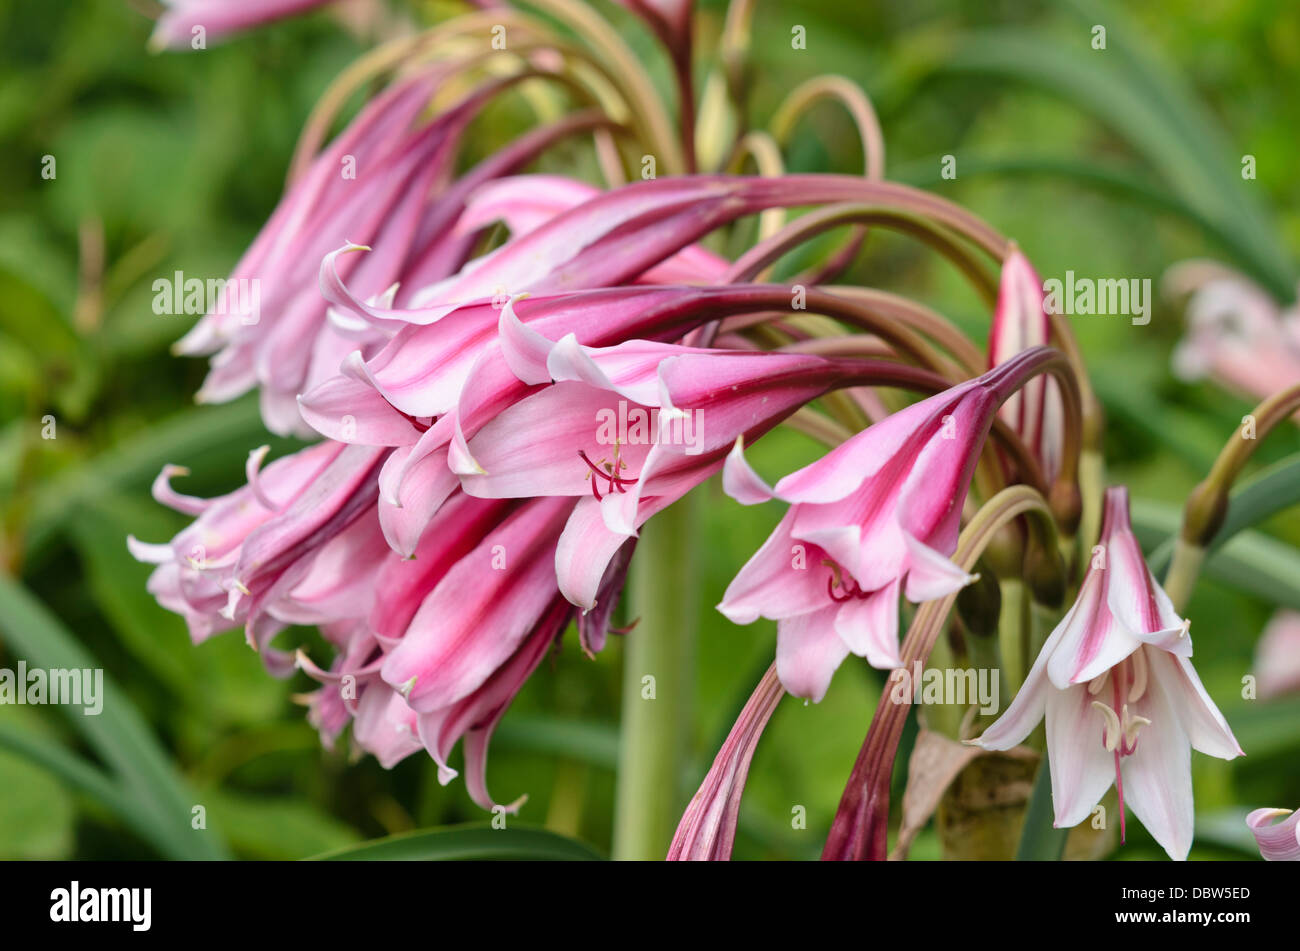 Hardy swamp lily (Crinum bulbispermum) Stock Photo